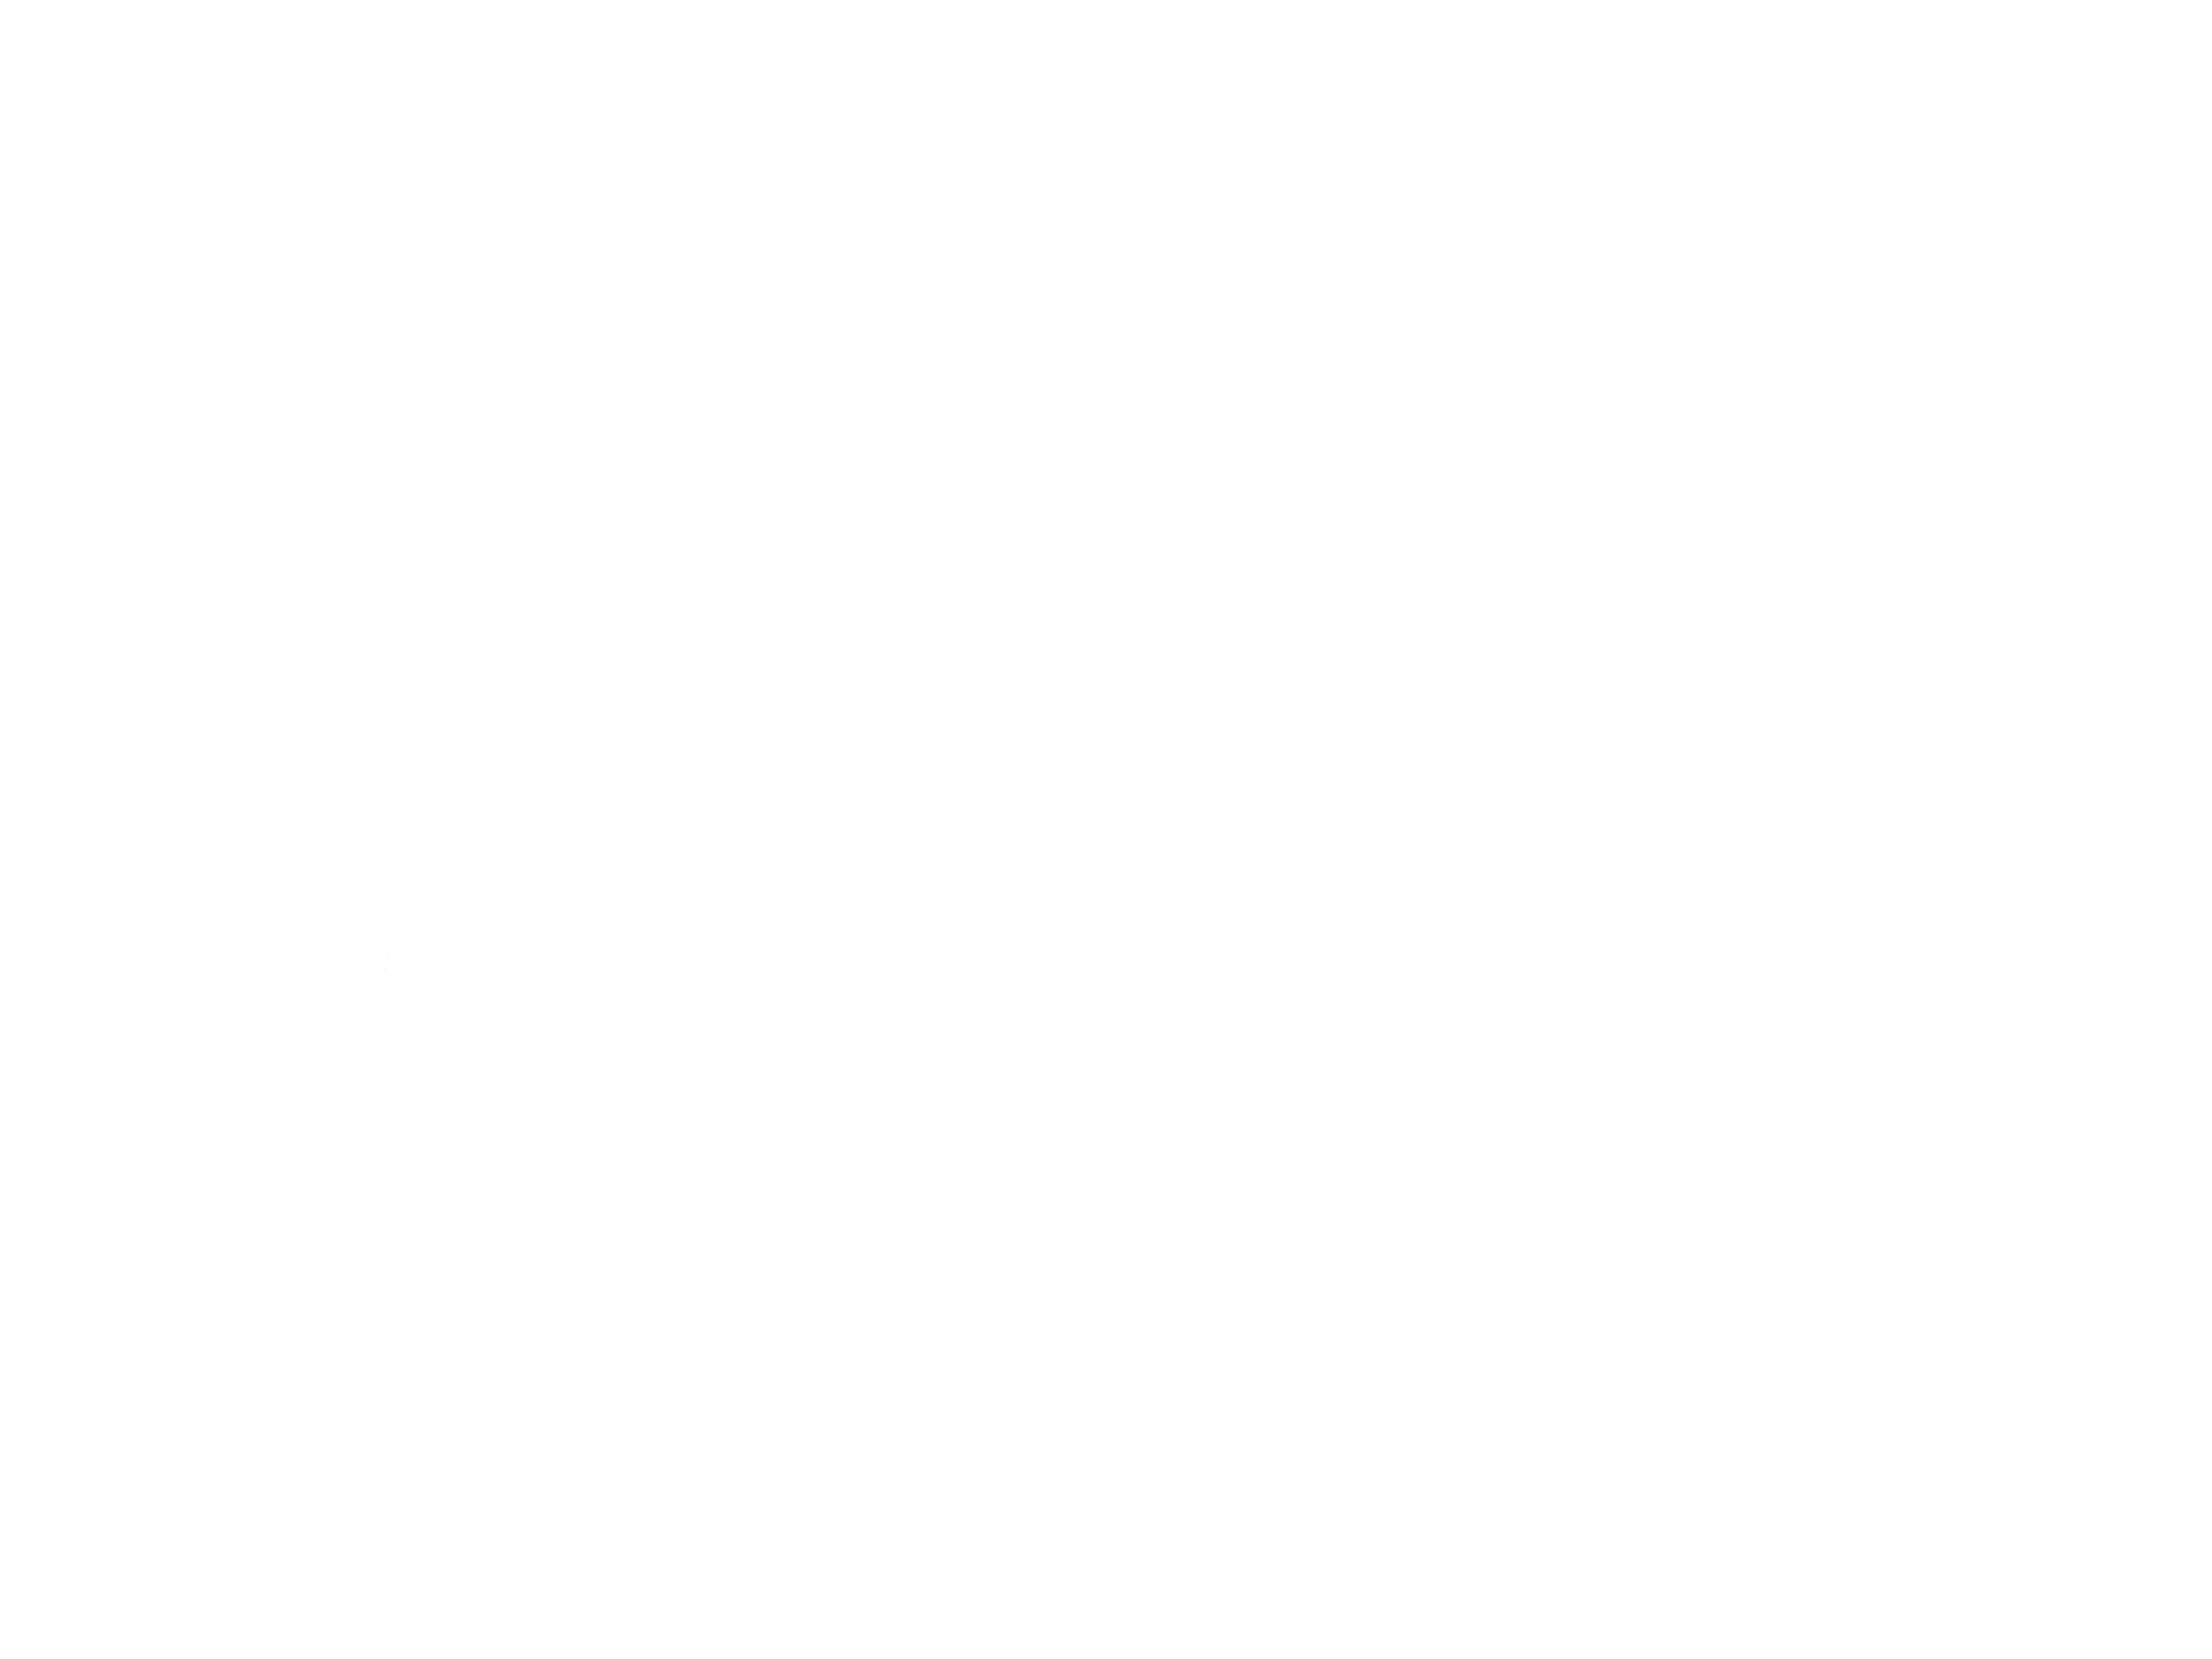 Brett English